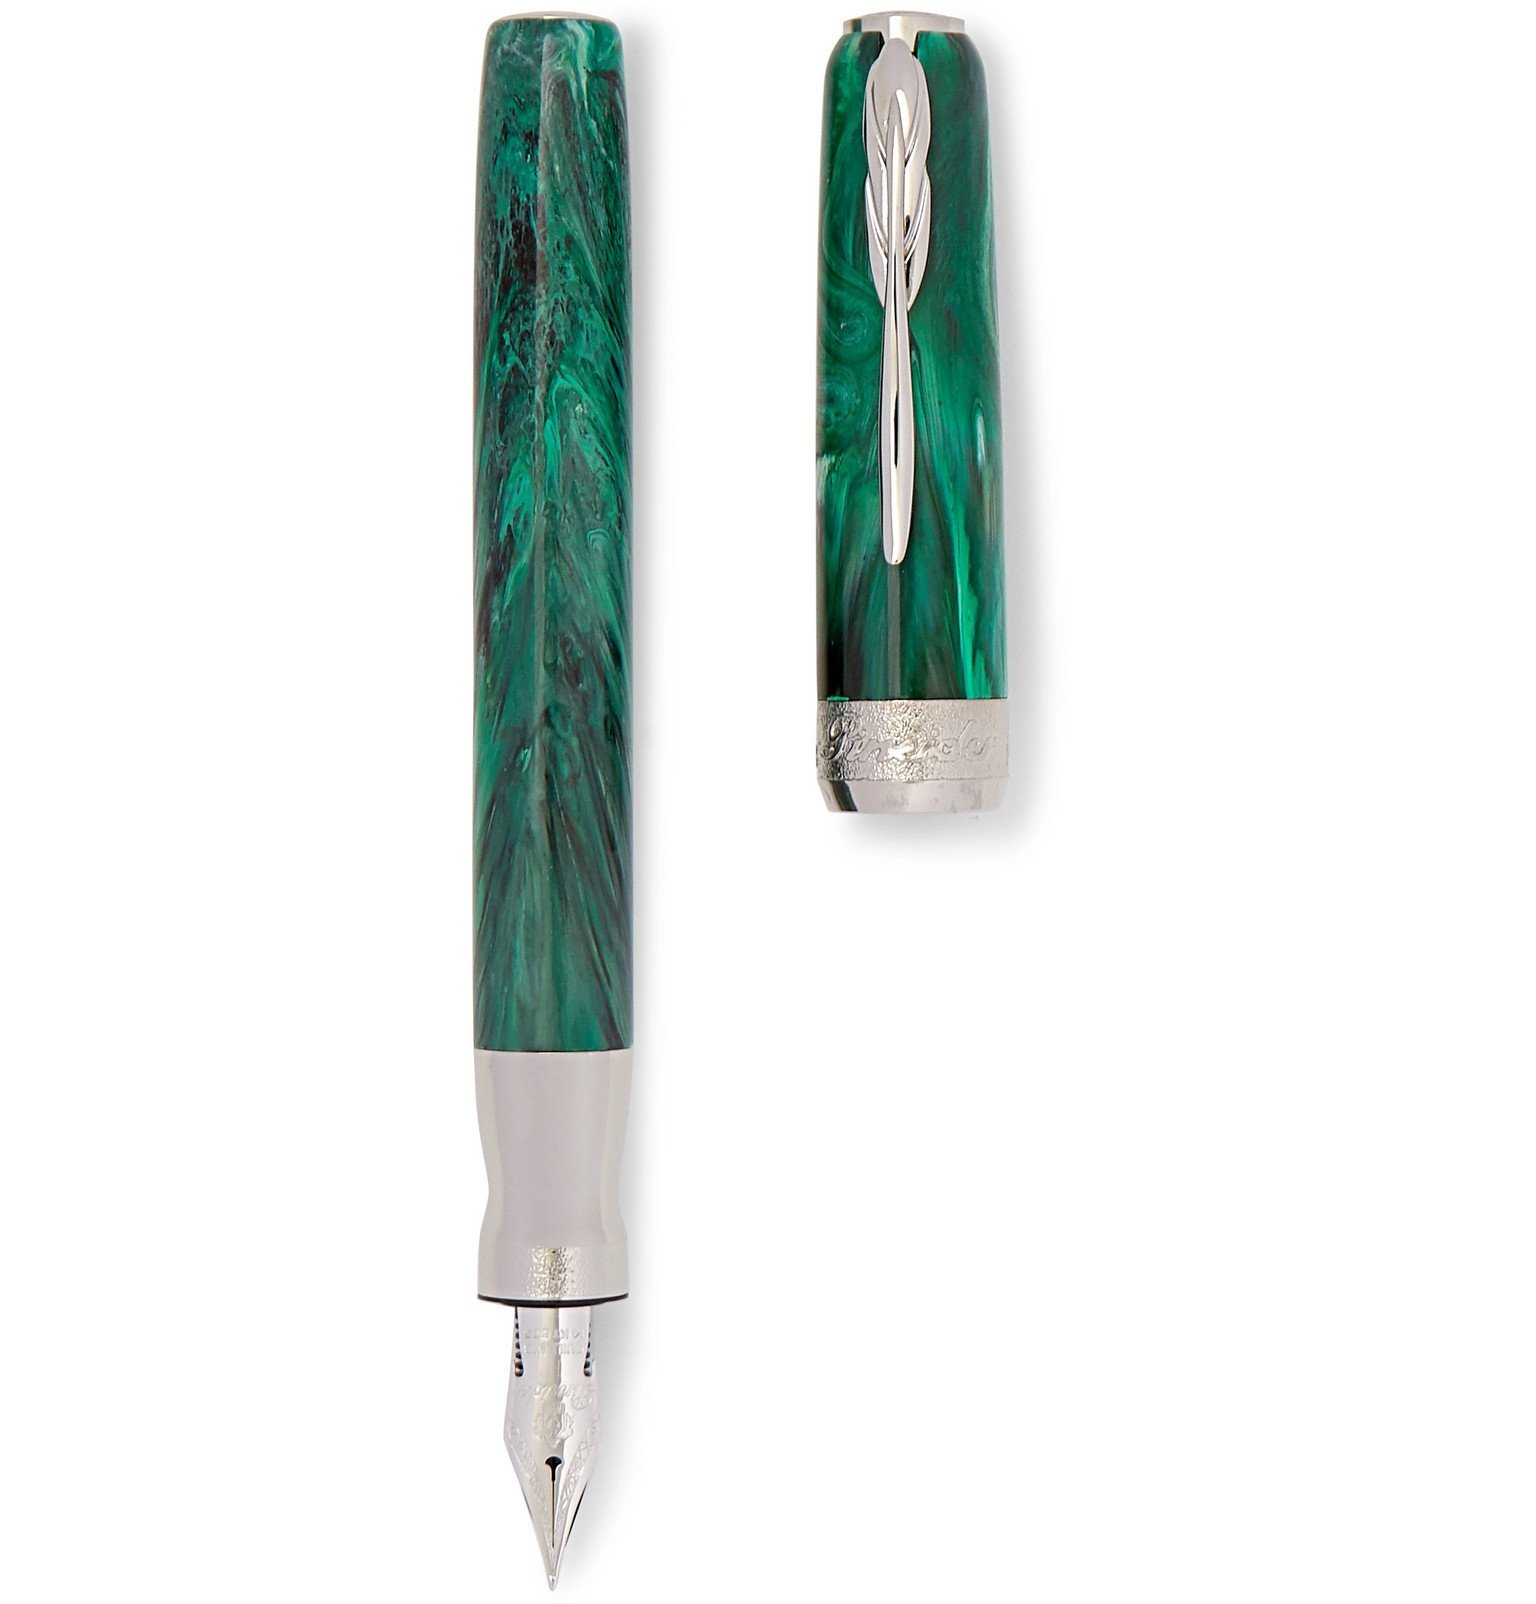 Malachite Green Brand New Pineider La Grande Bellezza Gemstone Rollerball Pen 